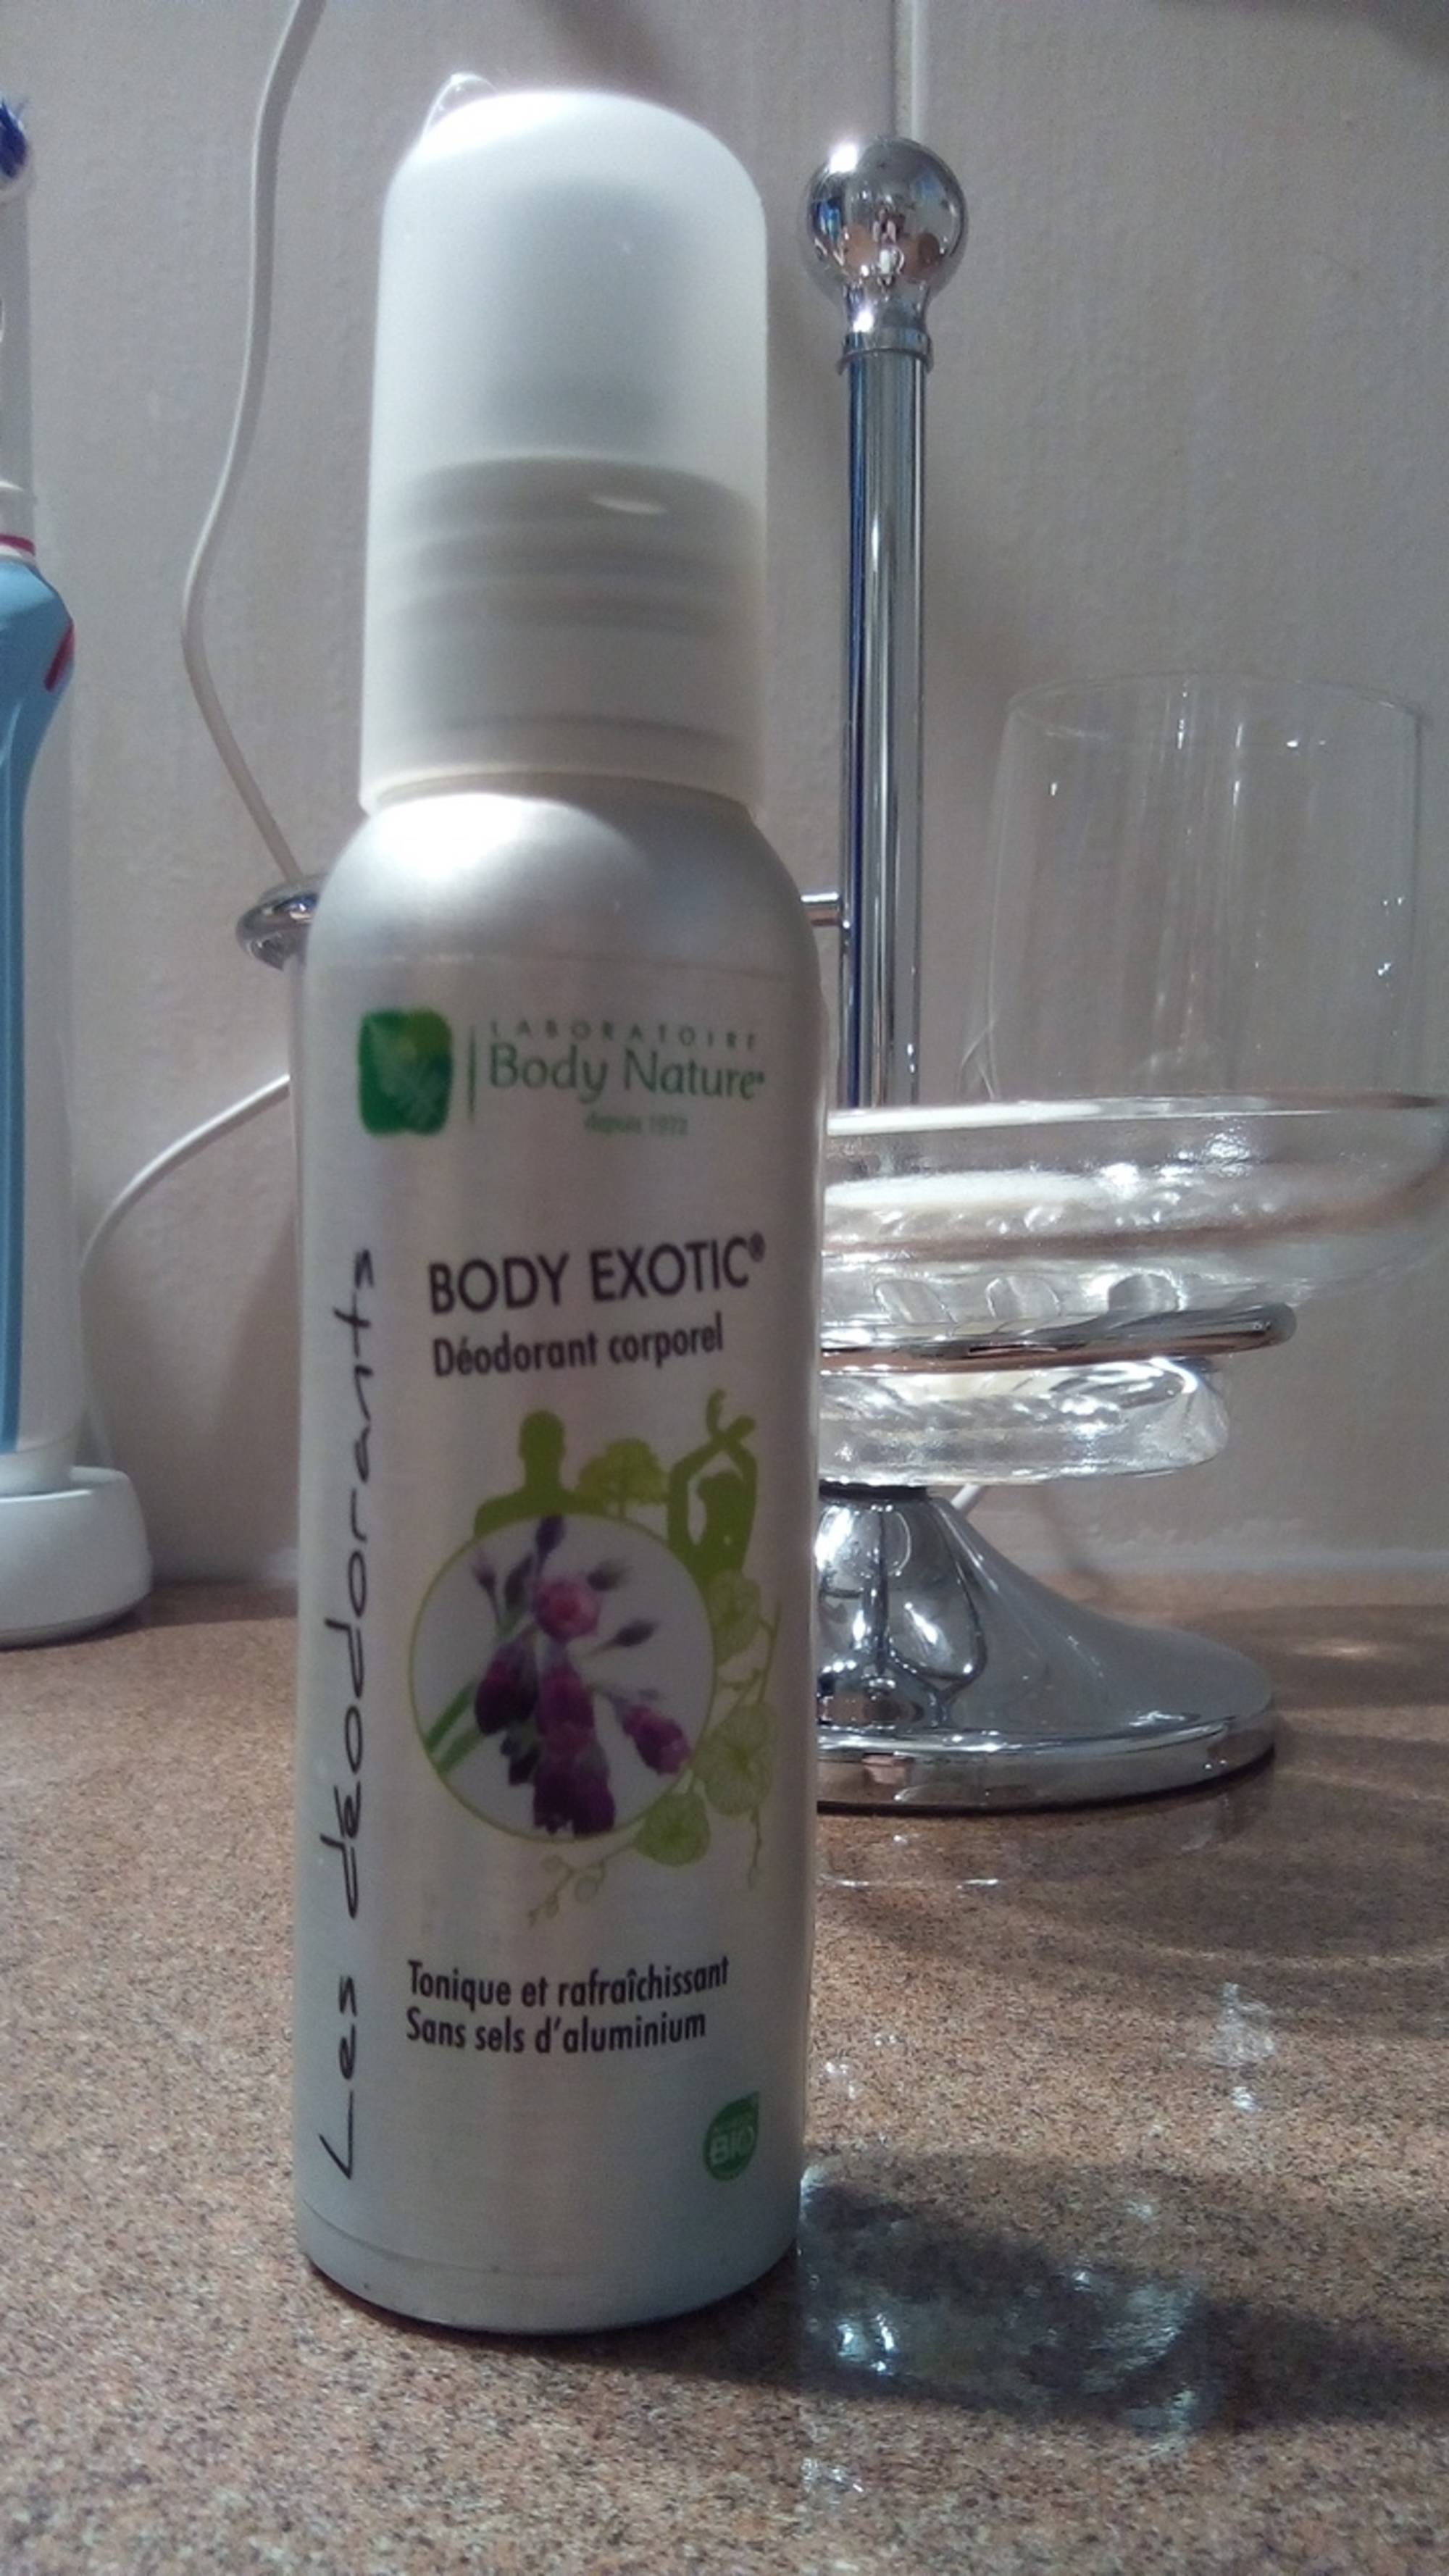 BODY NATURE - Body exotic - Déodorant corporel